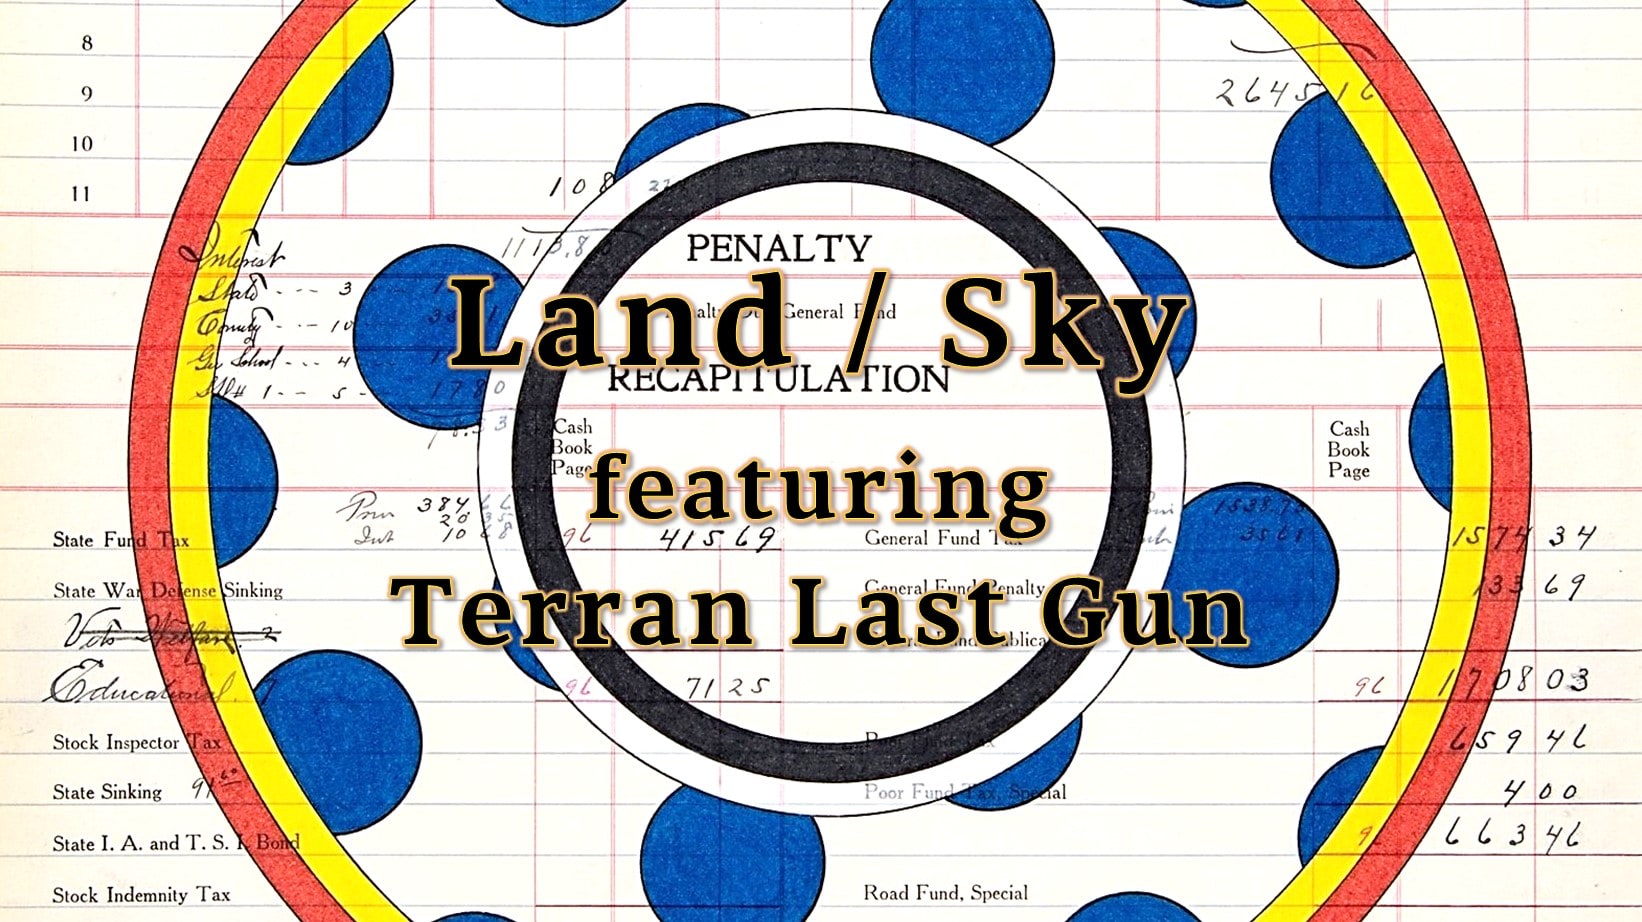 Land / Sky - Terran Last Gun - Viewing Room - Indian Arts and Crafts Board Online Exhibits Viewing Room